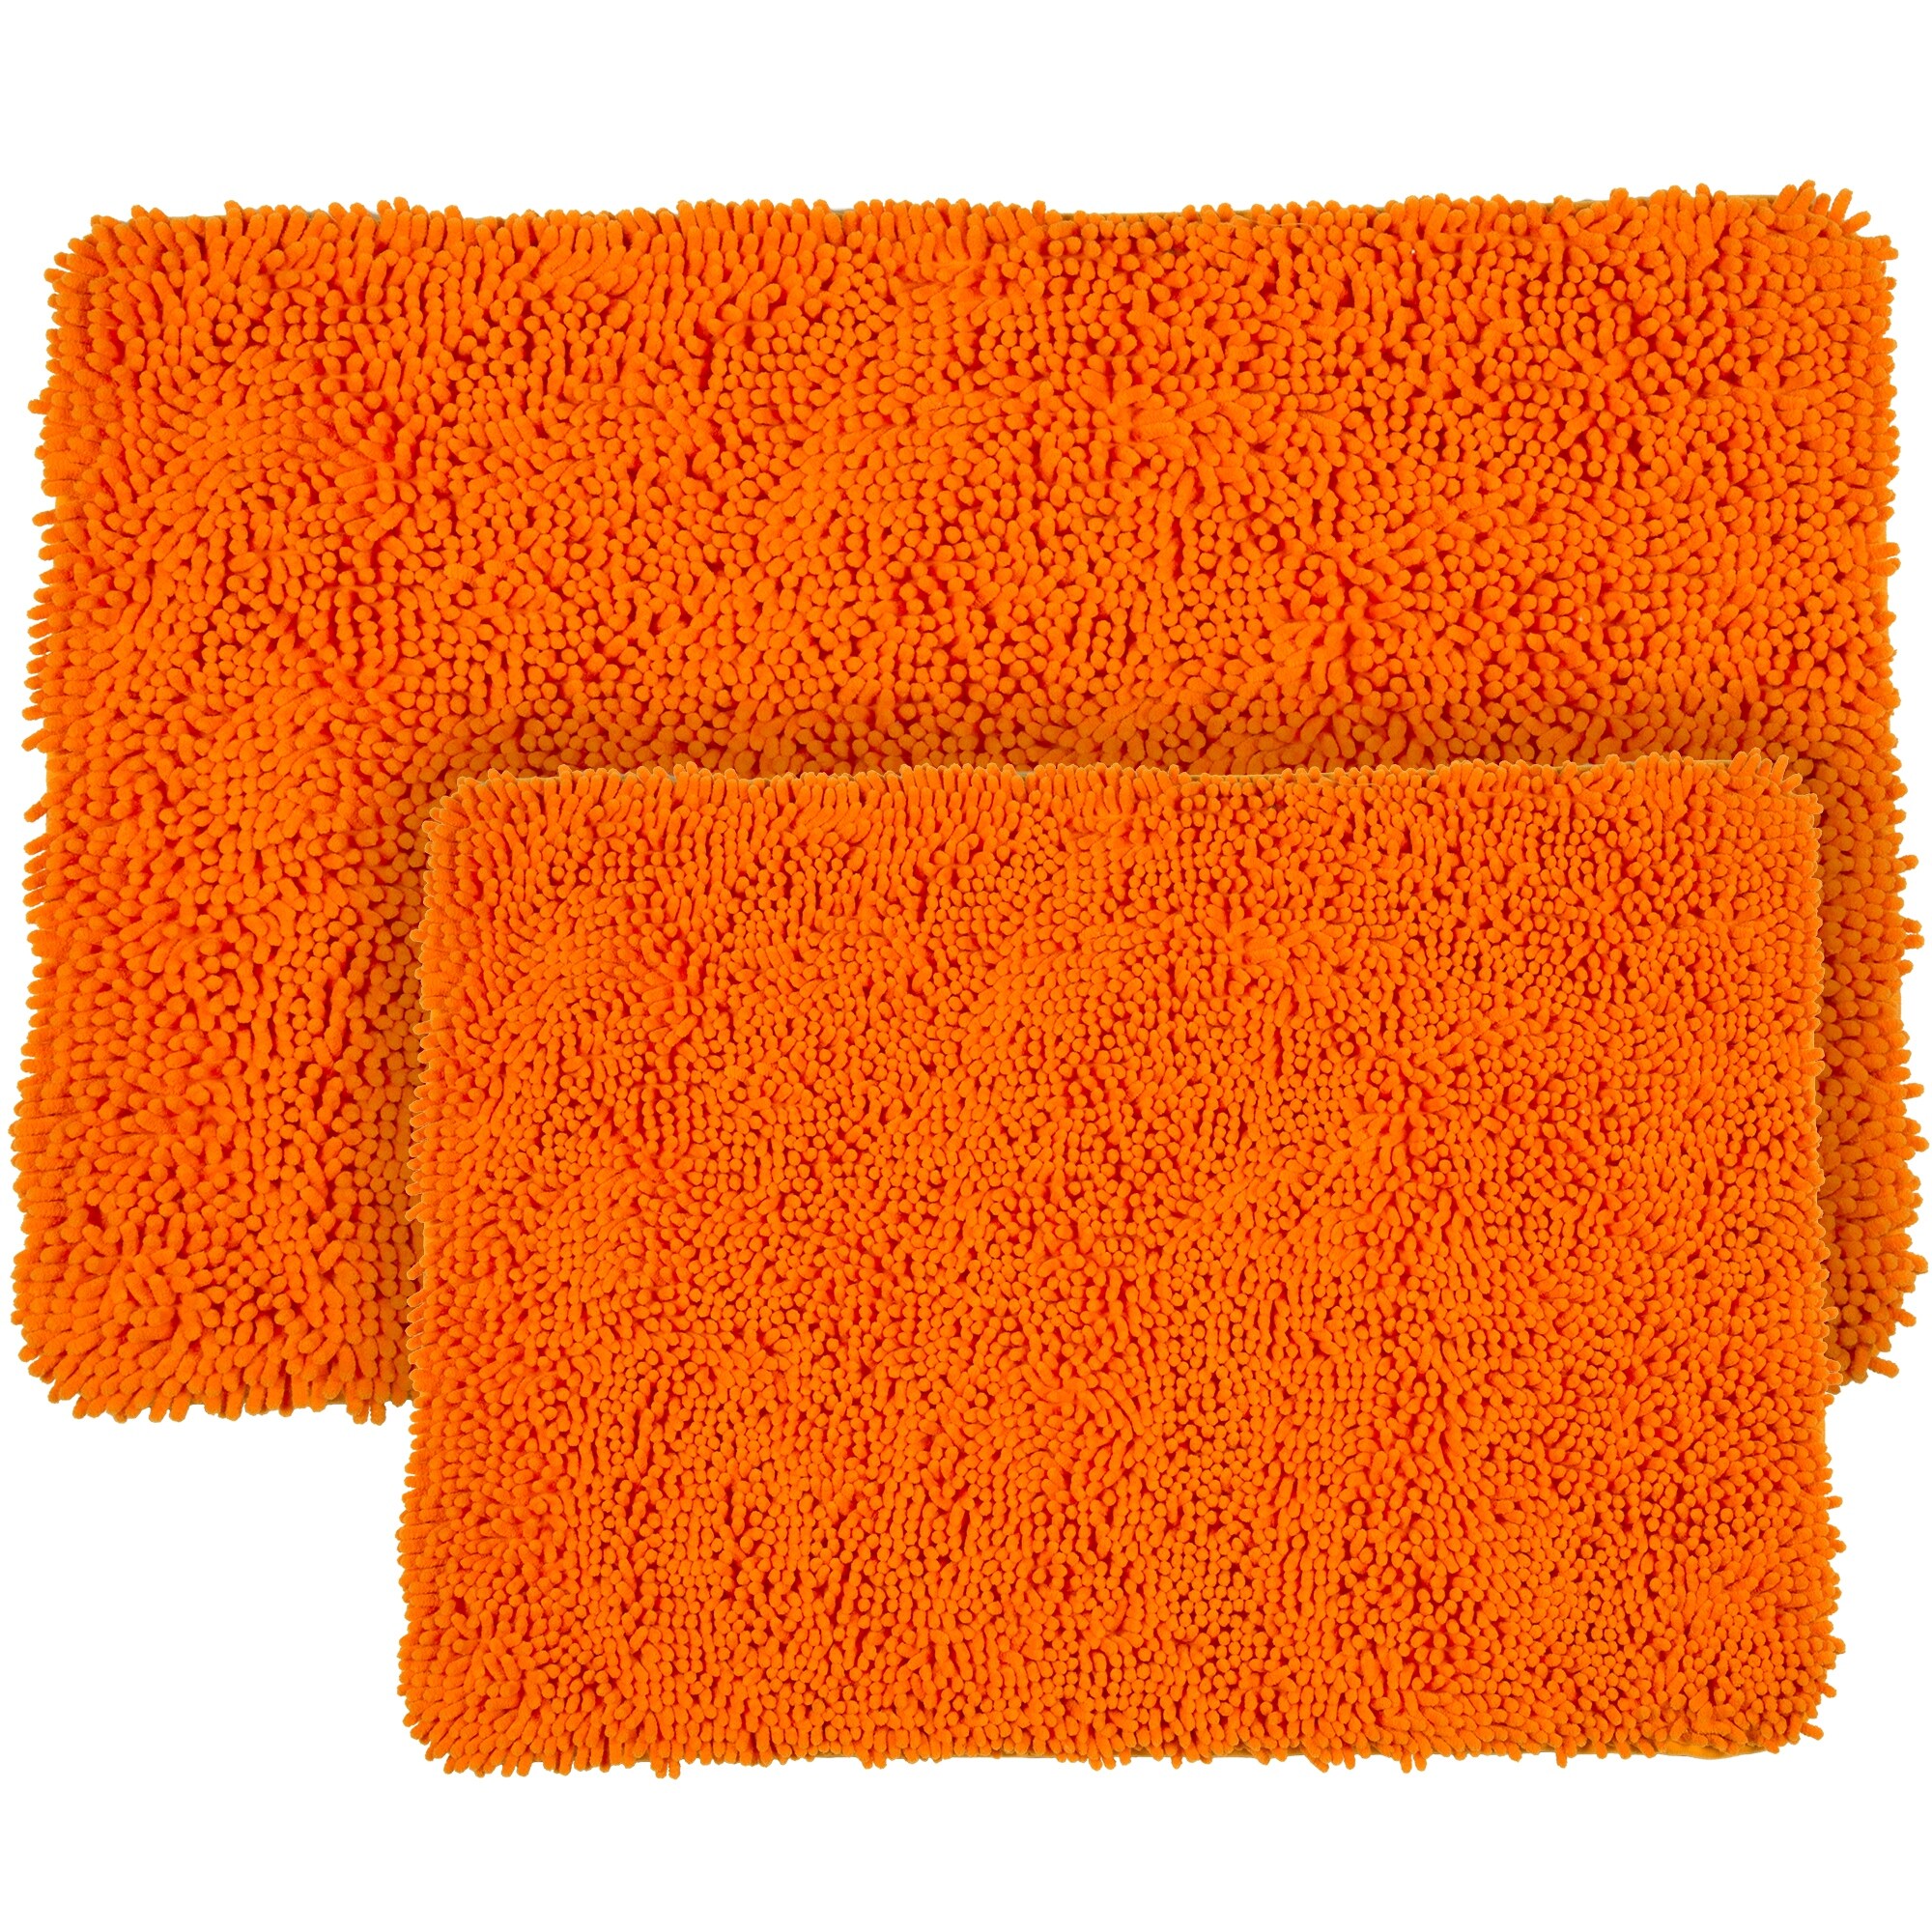 2-piece Bathroom Rug Set – Memory Foam Bath Mats With Plush Chenille Top  And Non-slip Base – Machine Washable Bathroom Rugs By Lavish Home (orange)  : Target